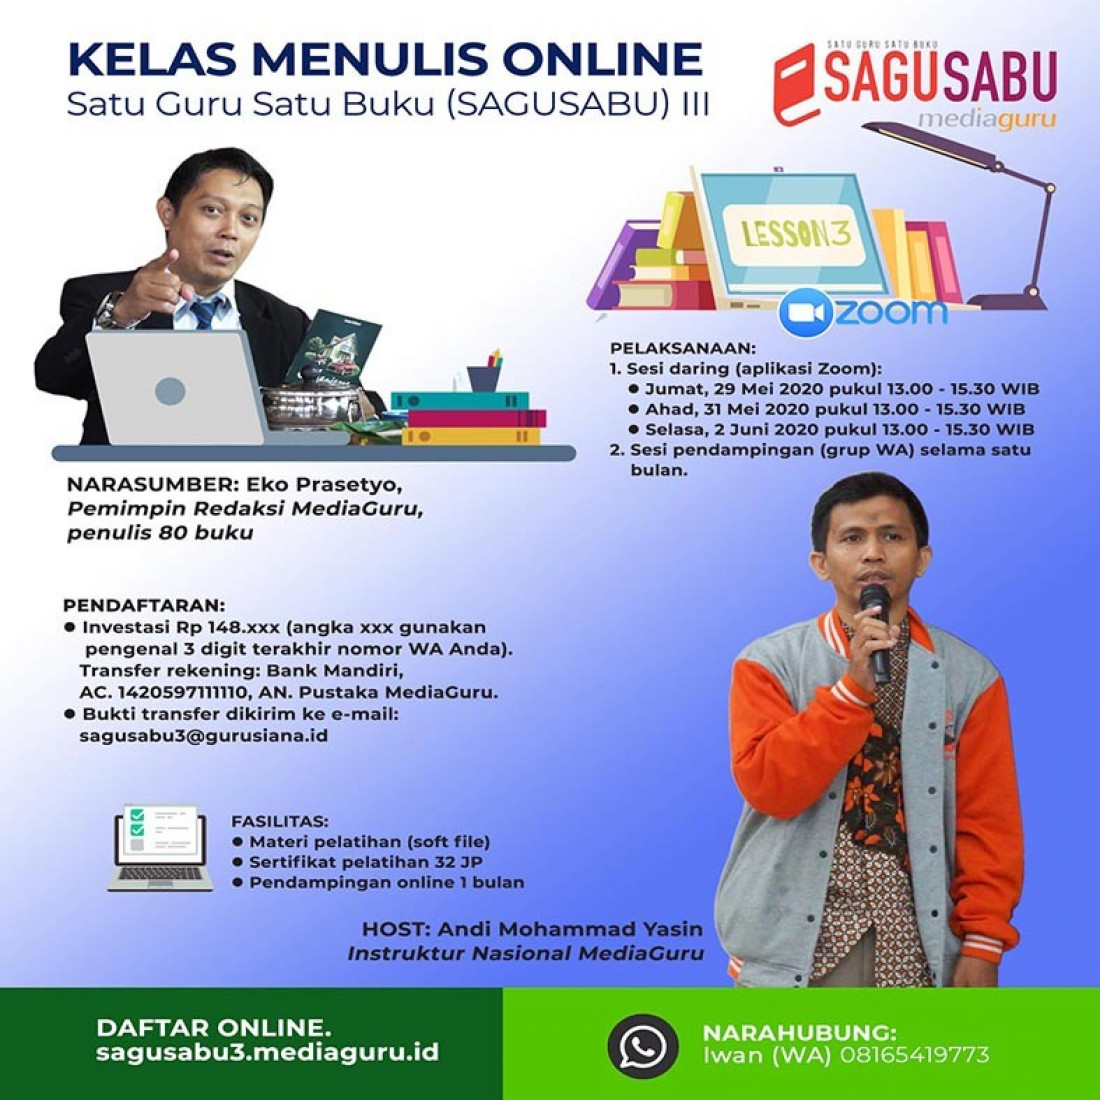 Kelas Menulis Satu Guru Satu Buku (Sagusabu) Online III (29 Mei - 2 Juni 2020)